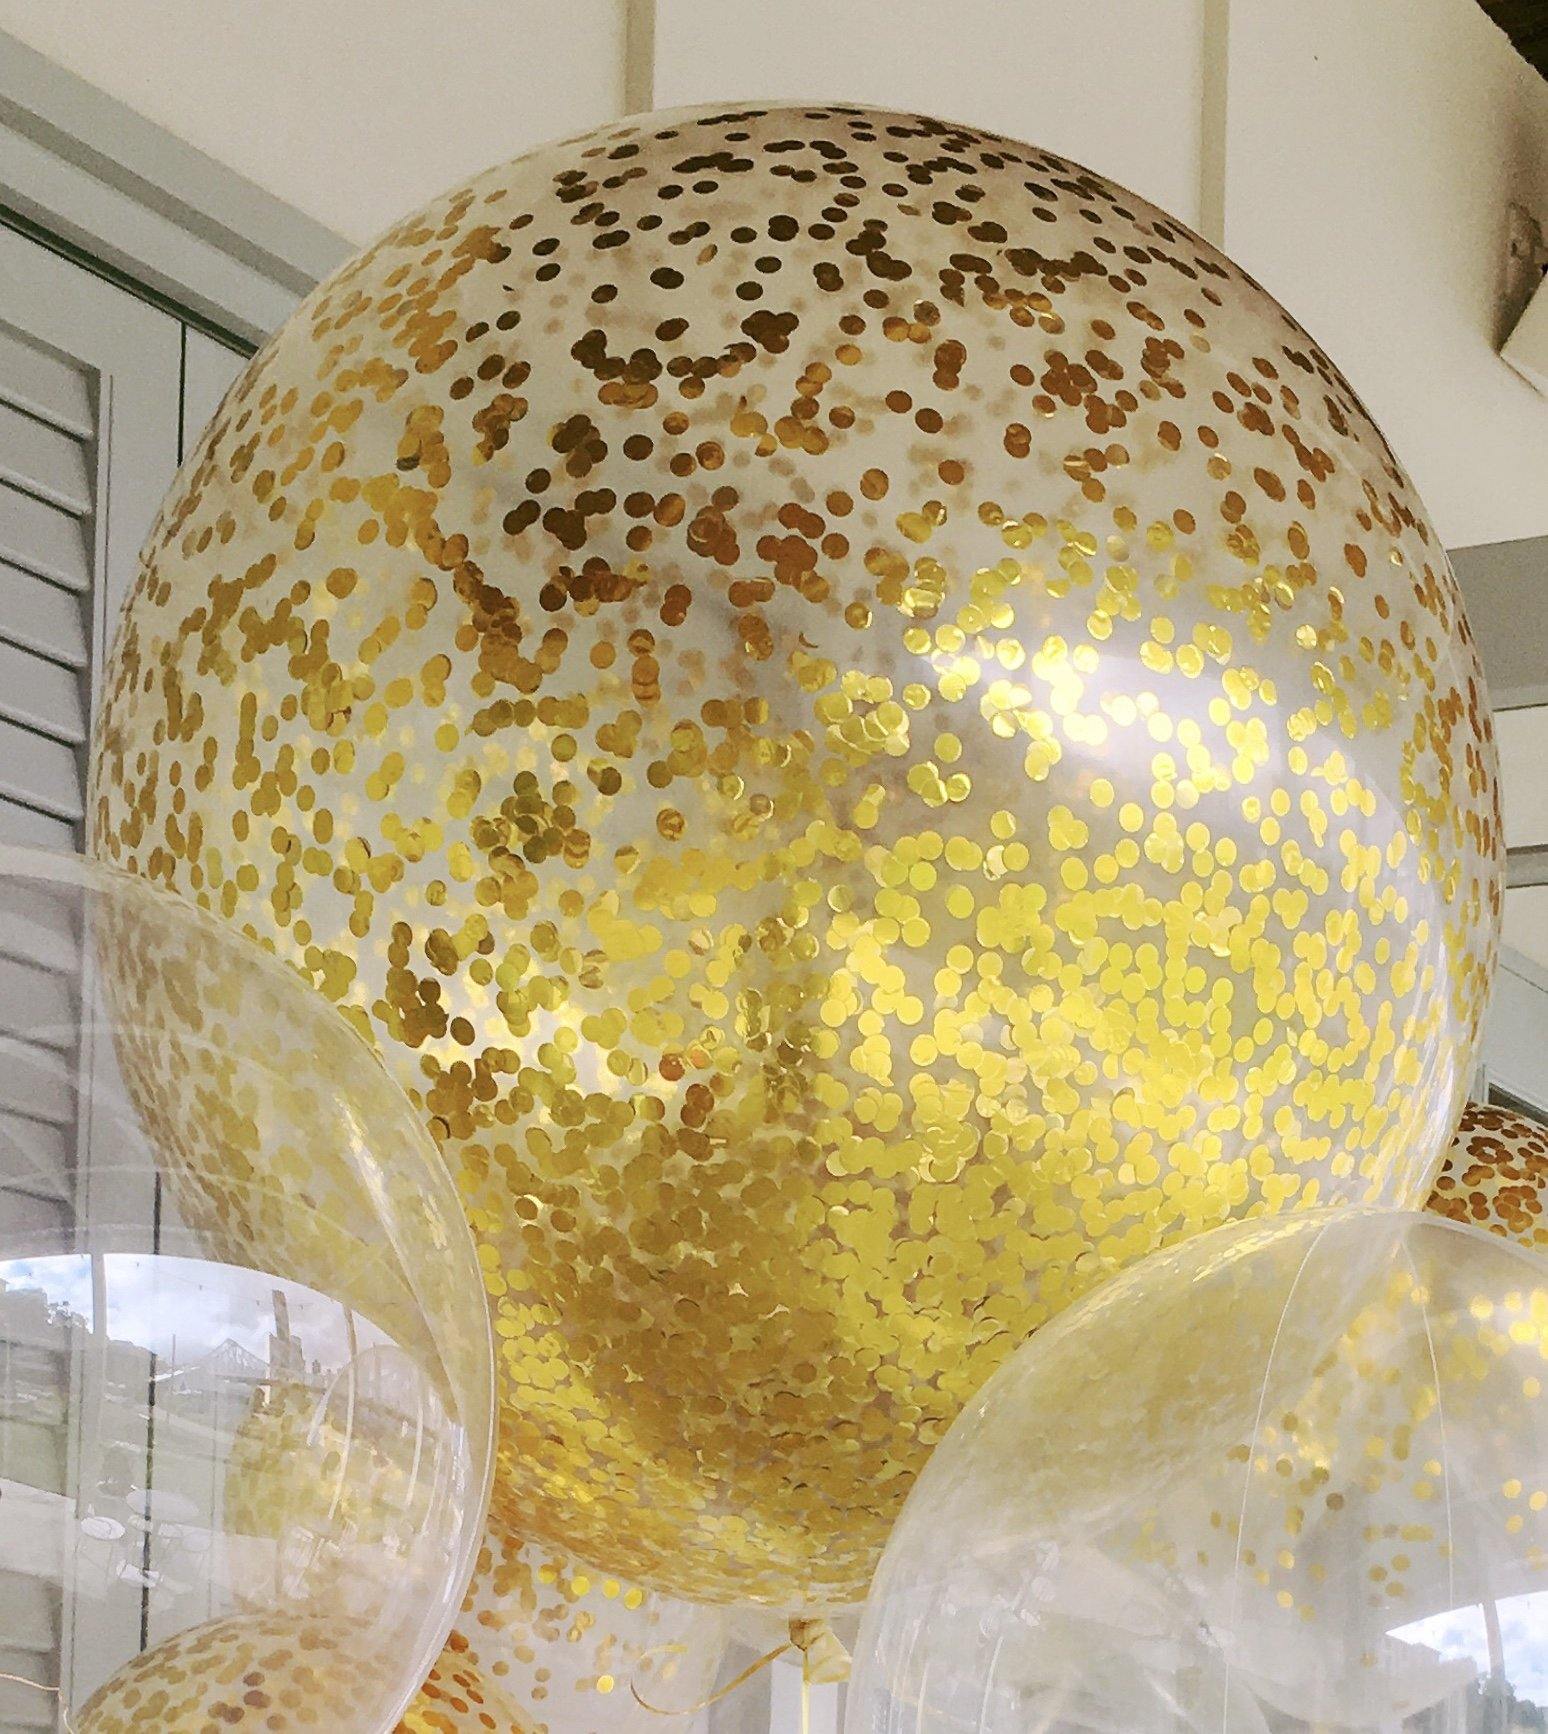 Jumbo Helium Filled  Confetti Balloon with small metallic gold confetti - Bickiboo Designs